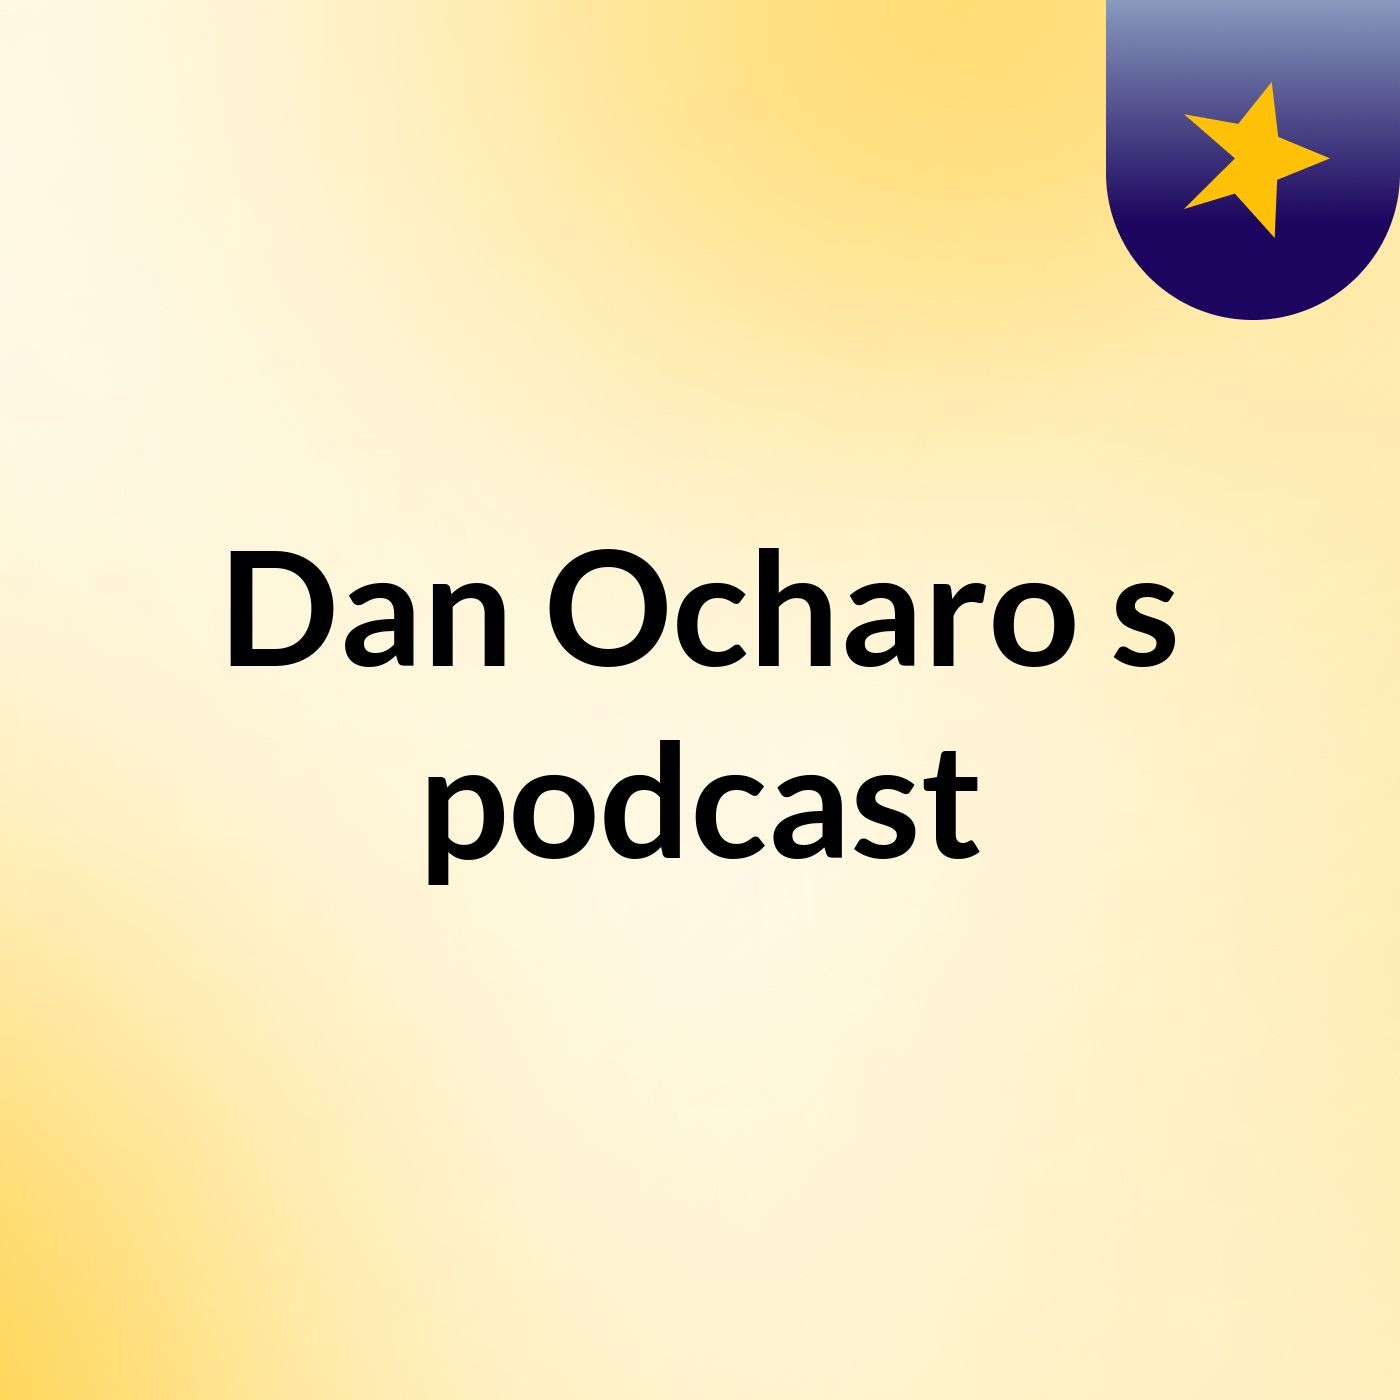 Dan Ocharo's podcast